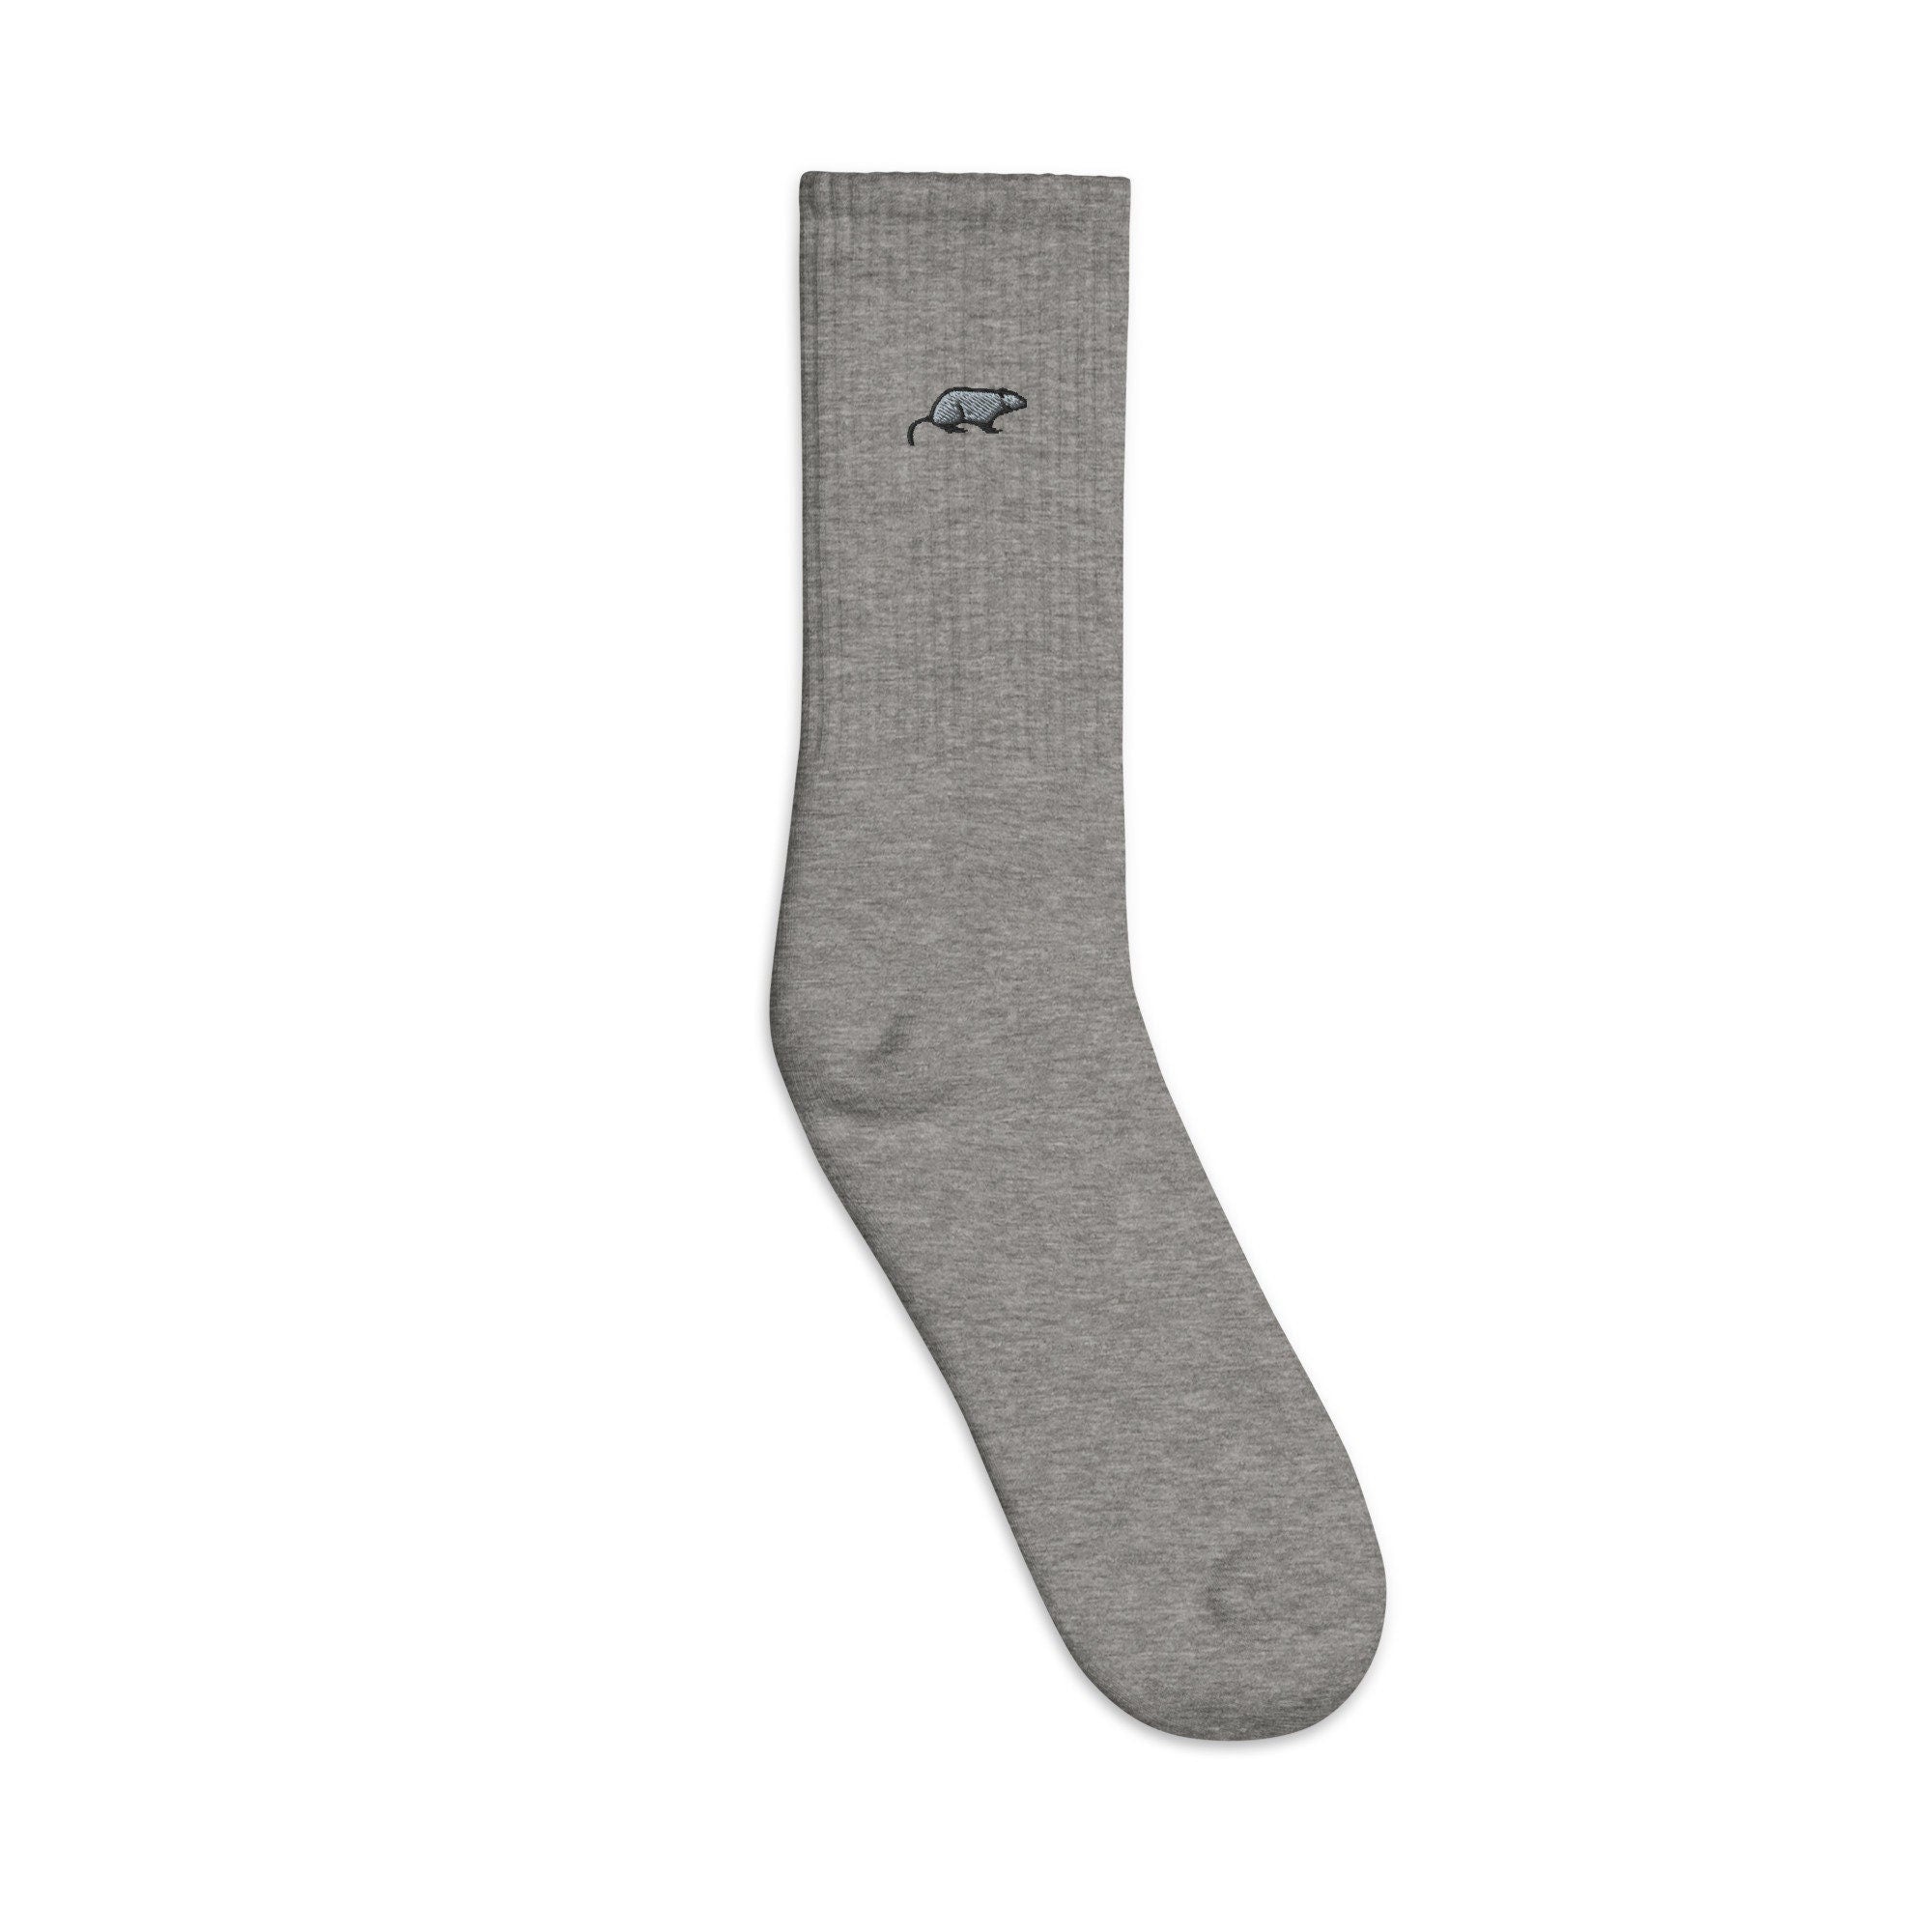 Rat Embroidered Socks, Premium Embroidered Socks, Long Socks Gift - Multiple Colors